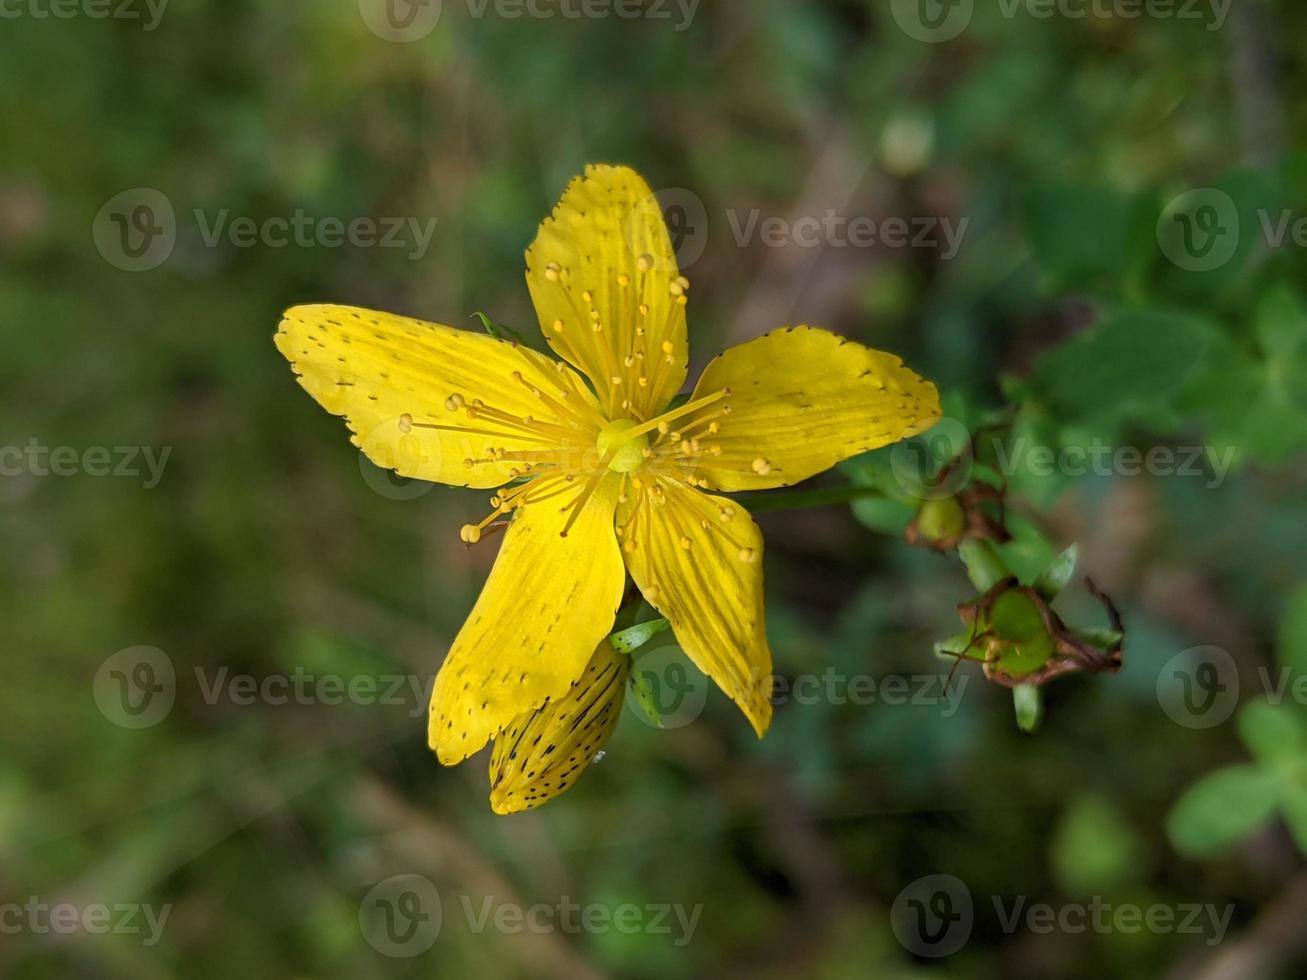 gele bloem van sint-janskruid bloeit op natuurlijke groene achtergrond foto